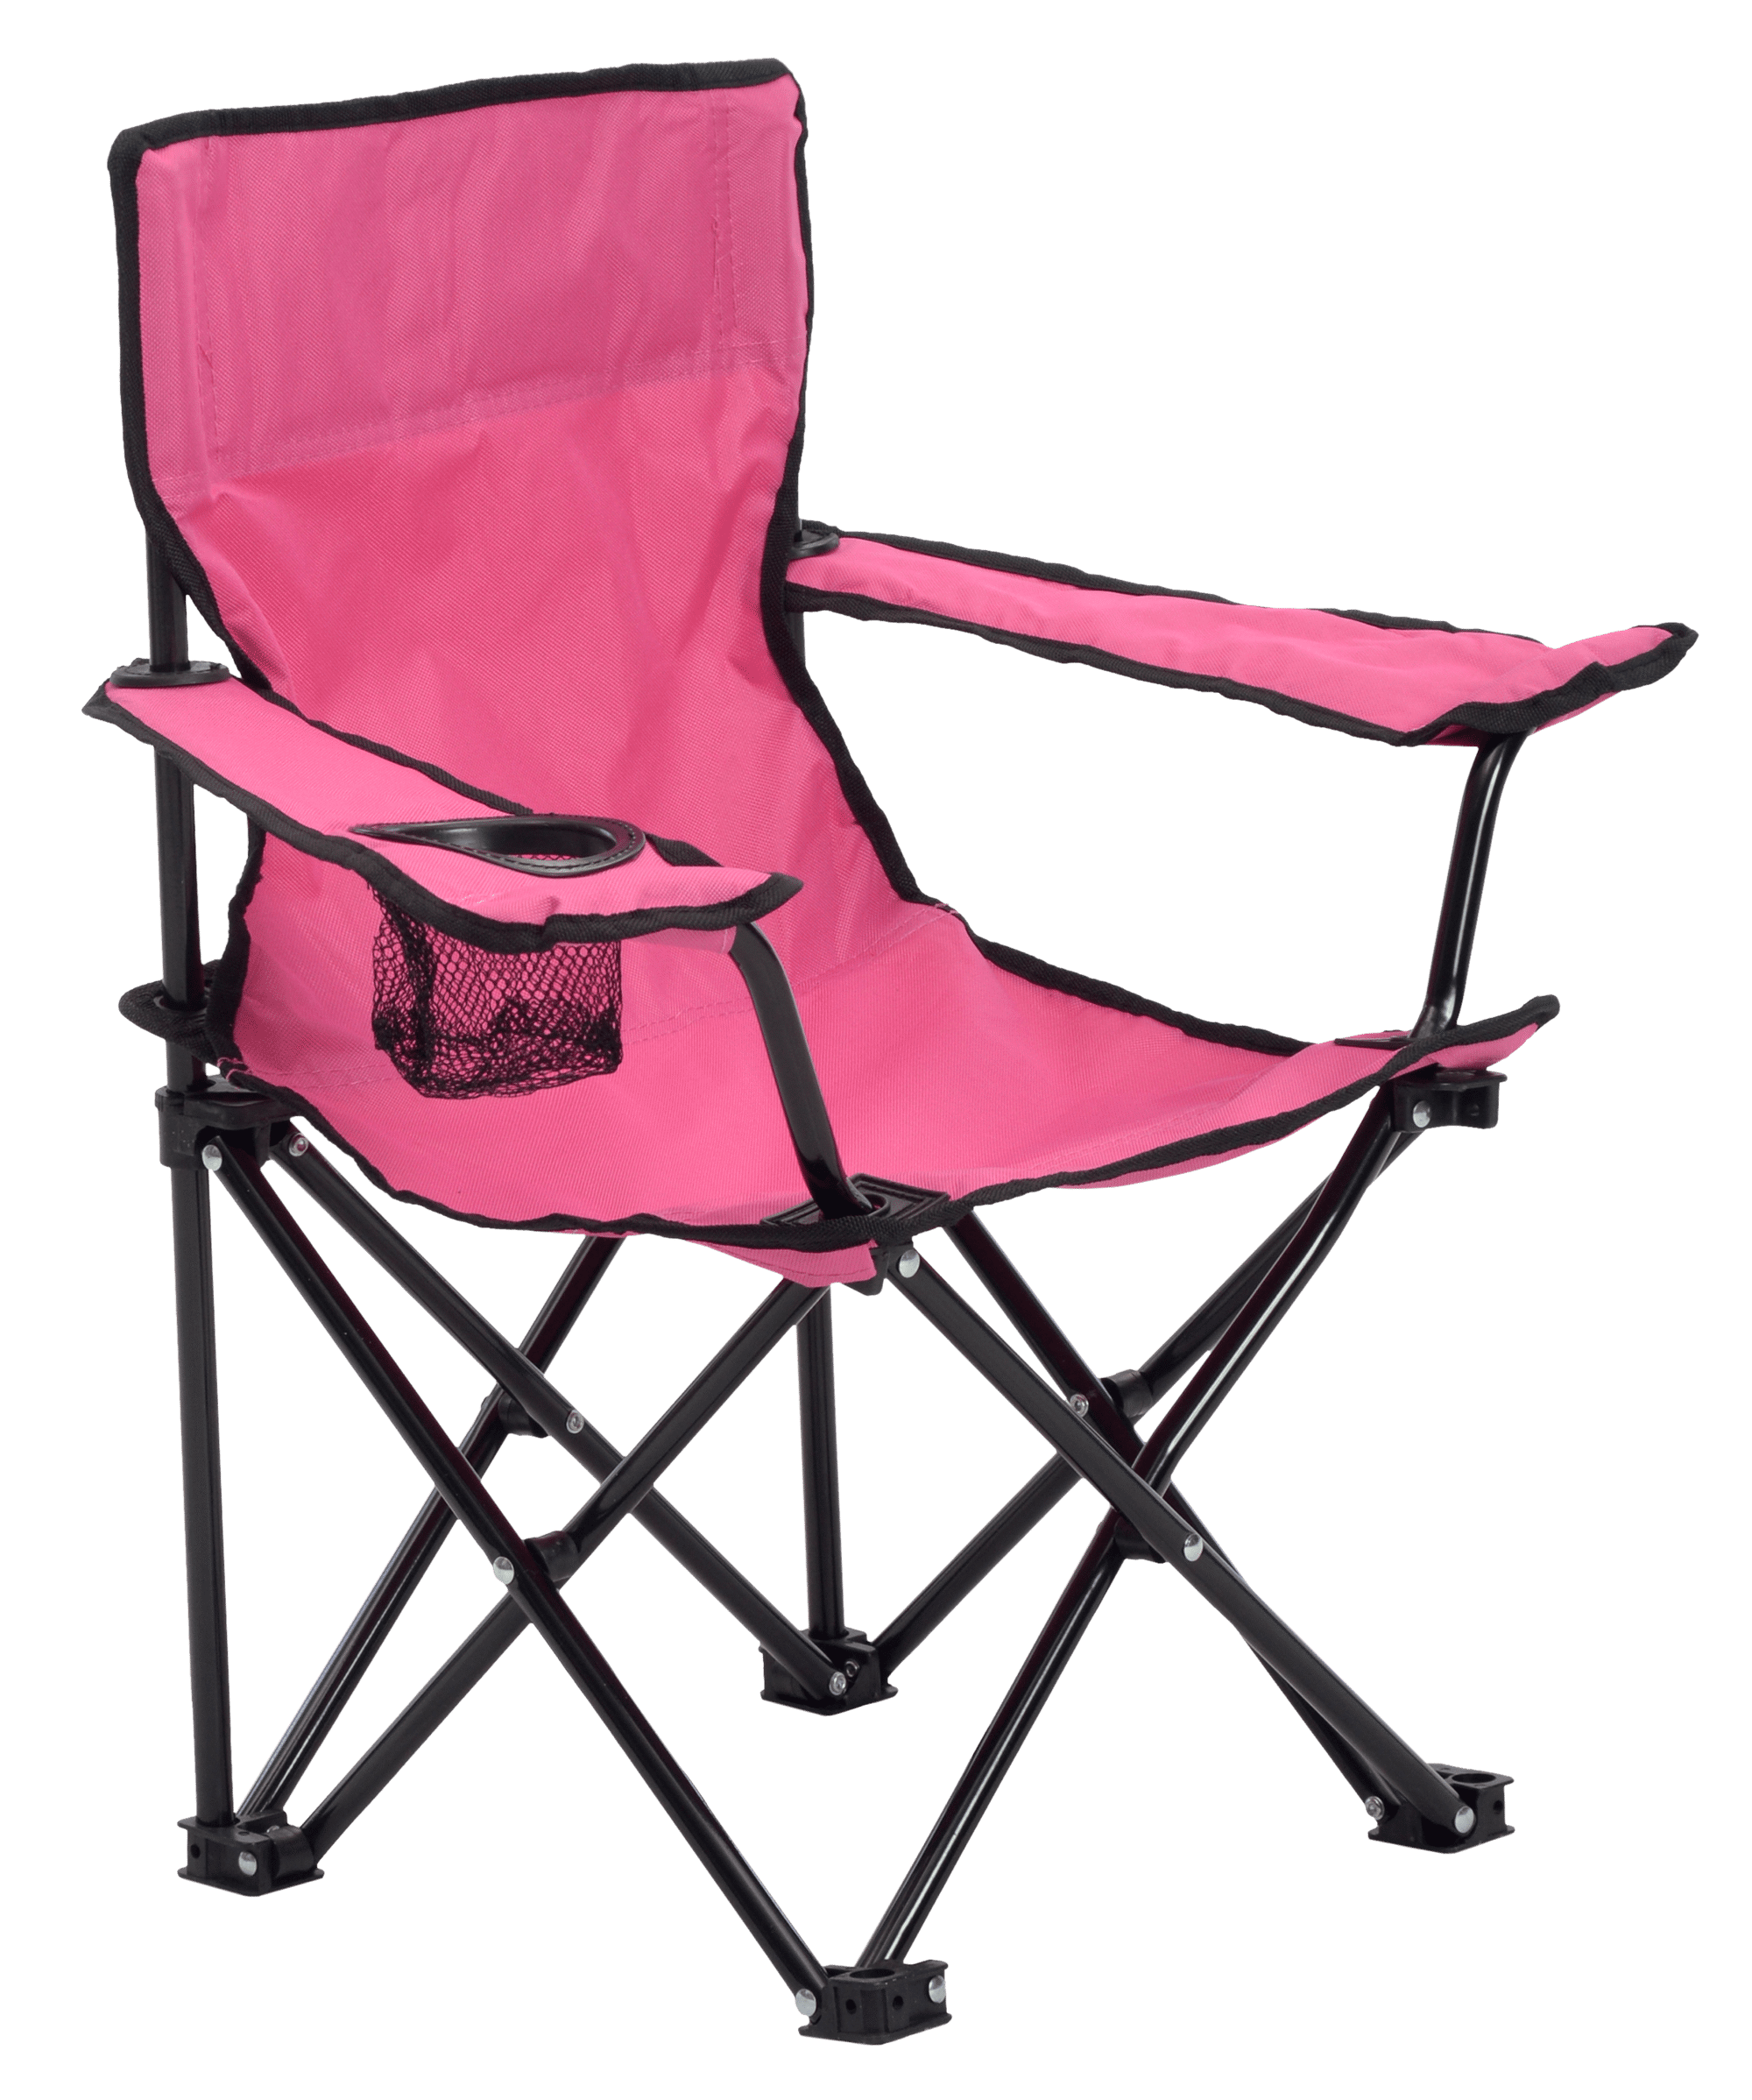 Kid's Folding Chair - Pink - Walmart.com - Walmart.com